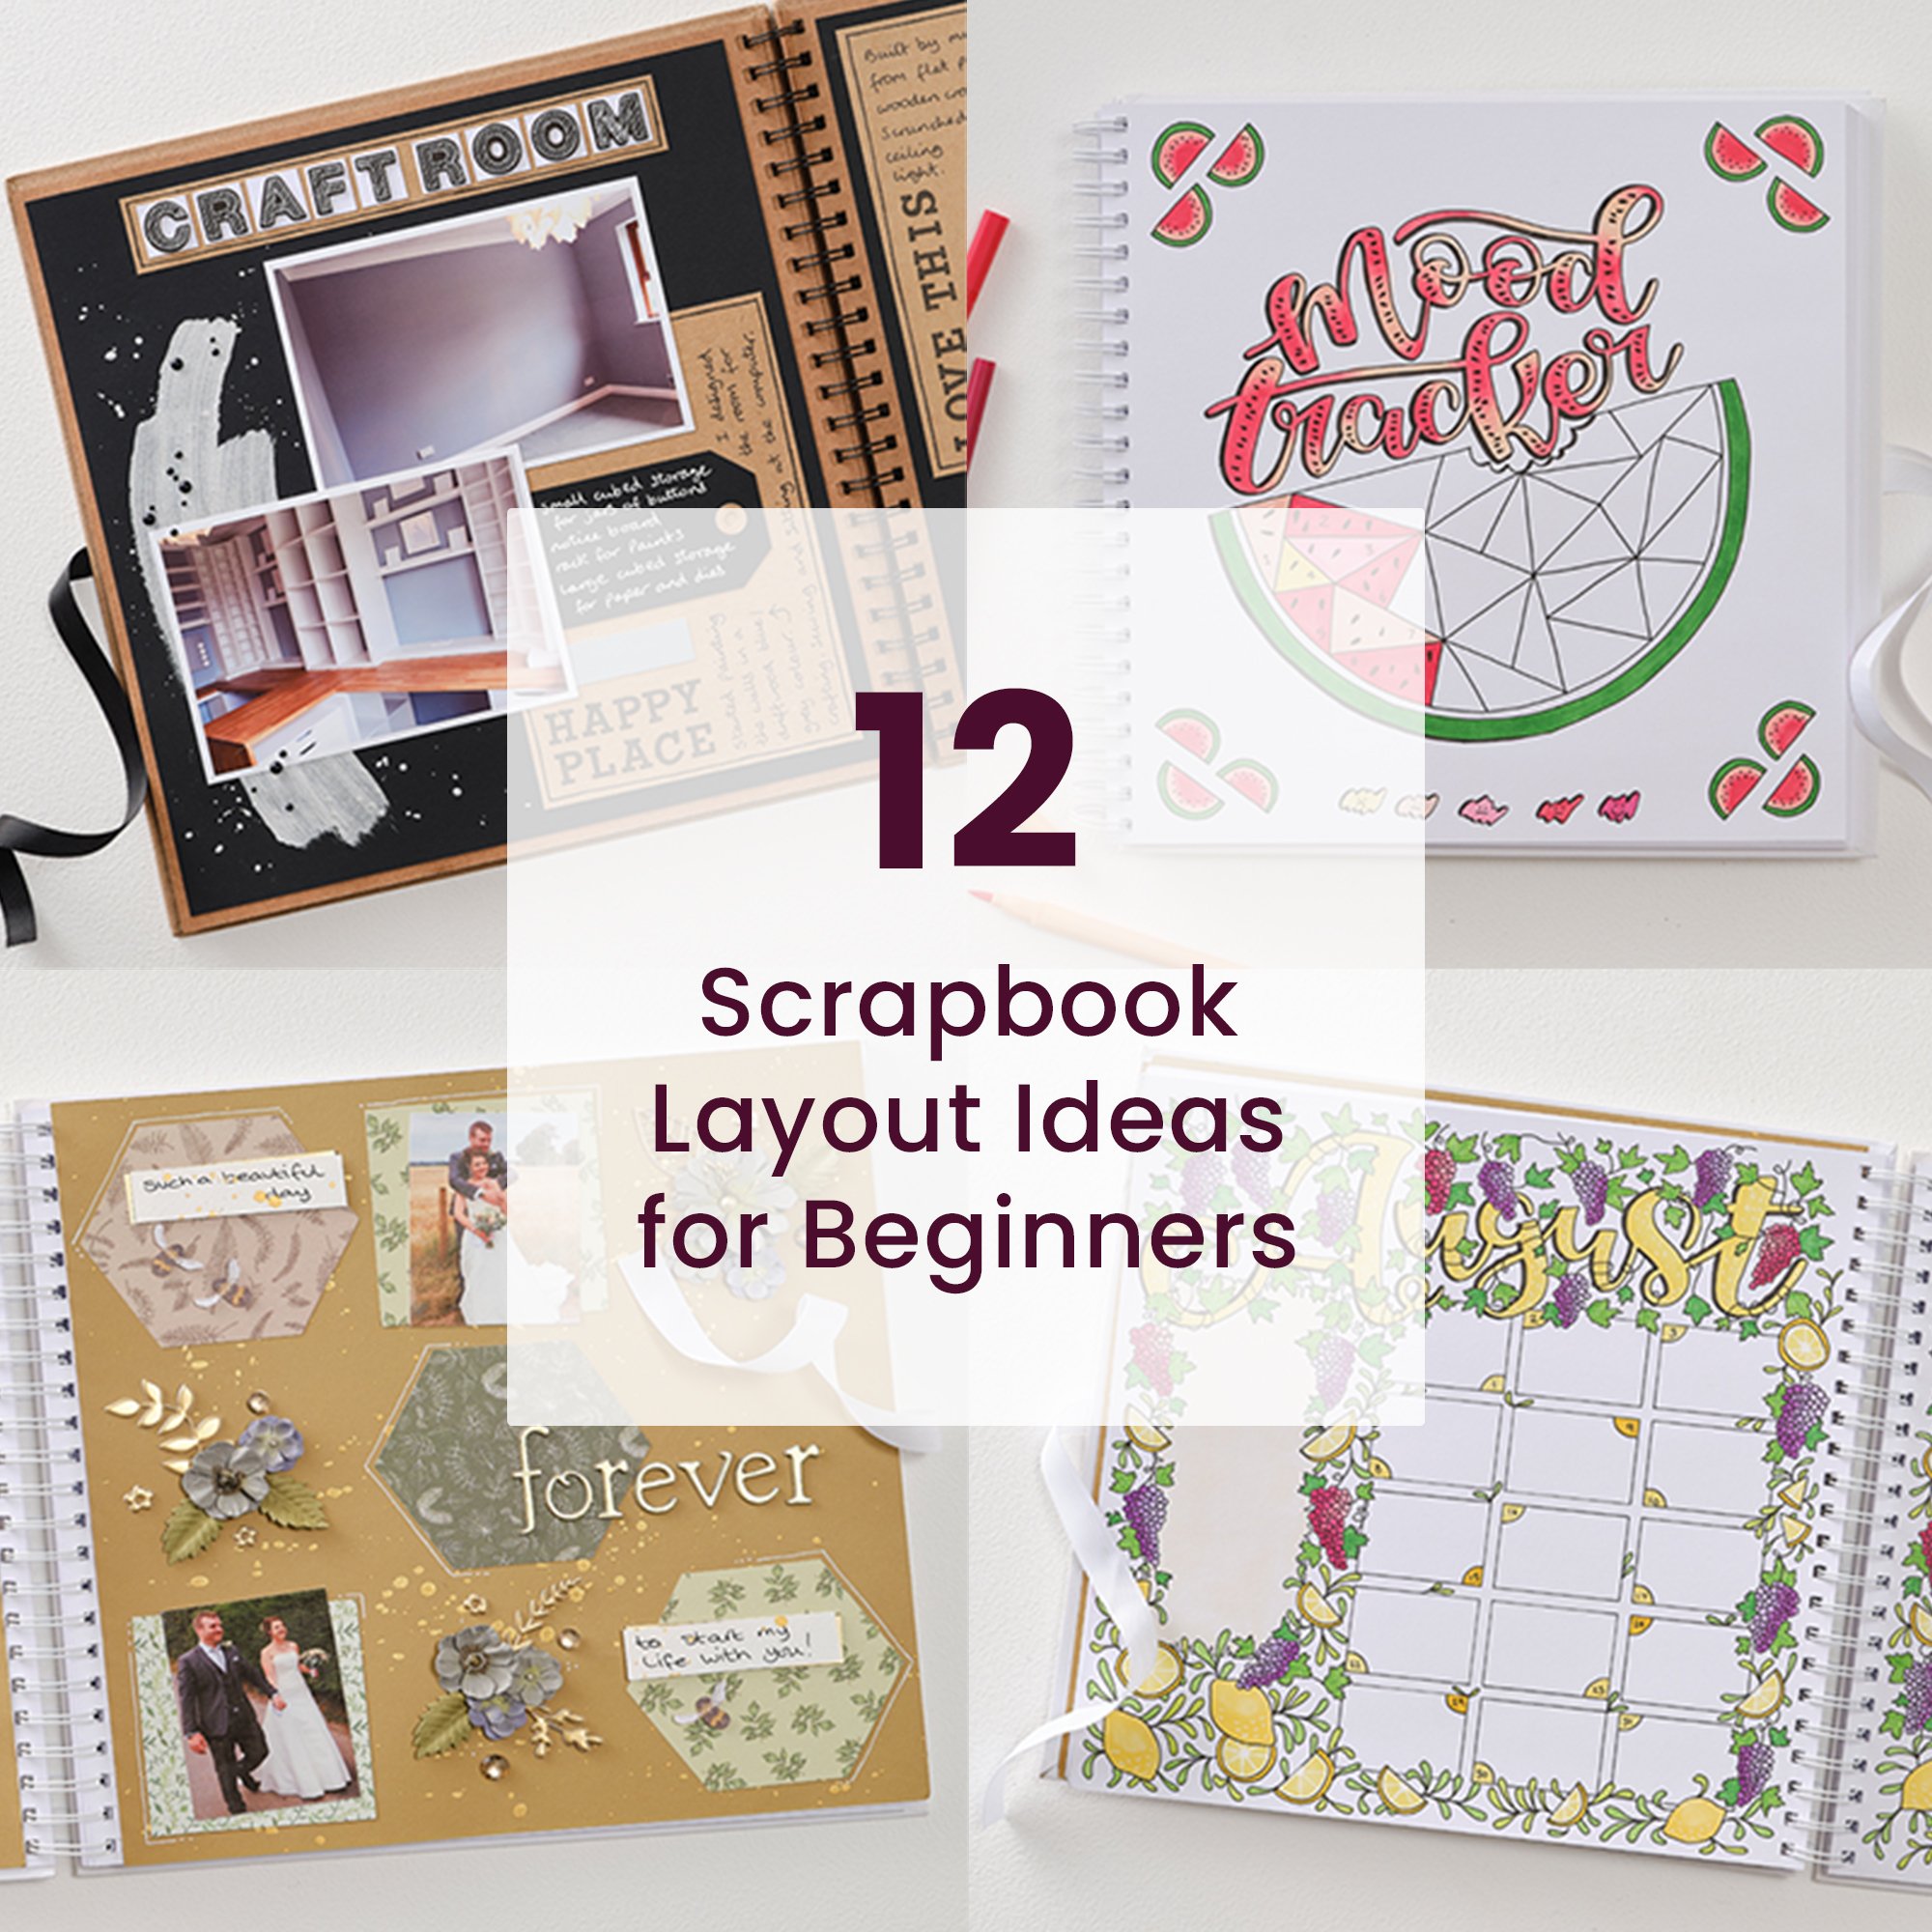 How to scrapbook your recipes - The Scrapbook Room